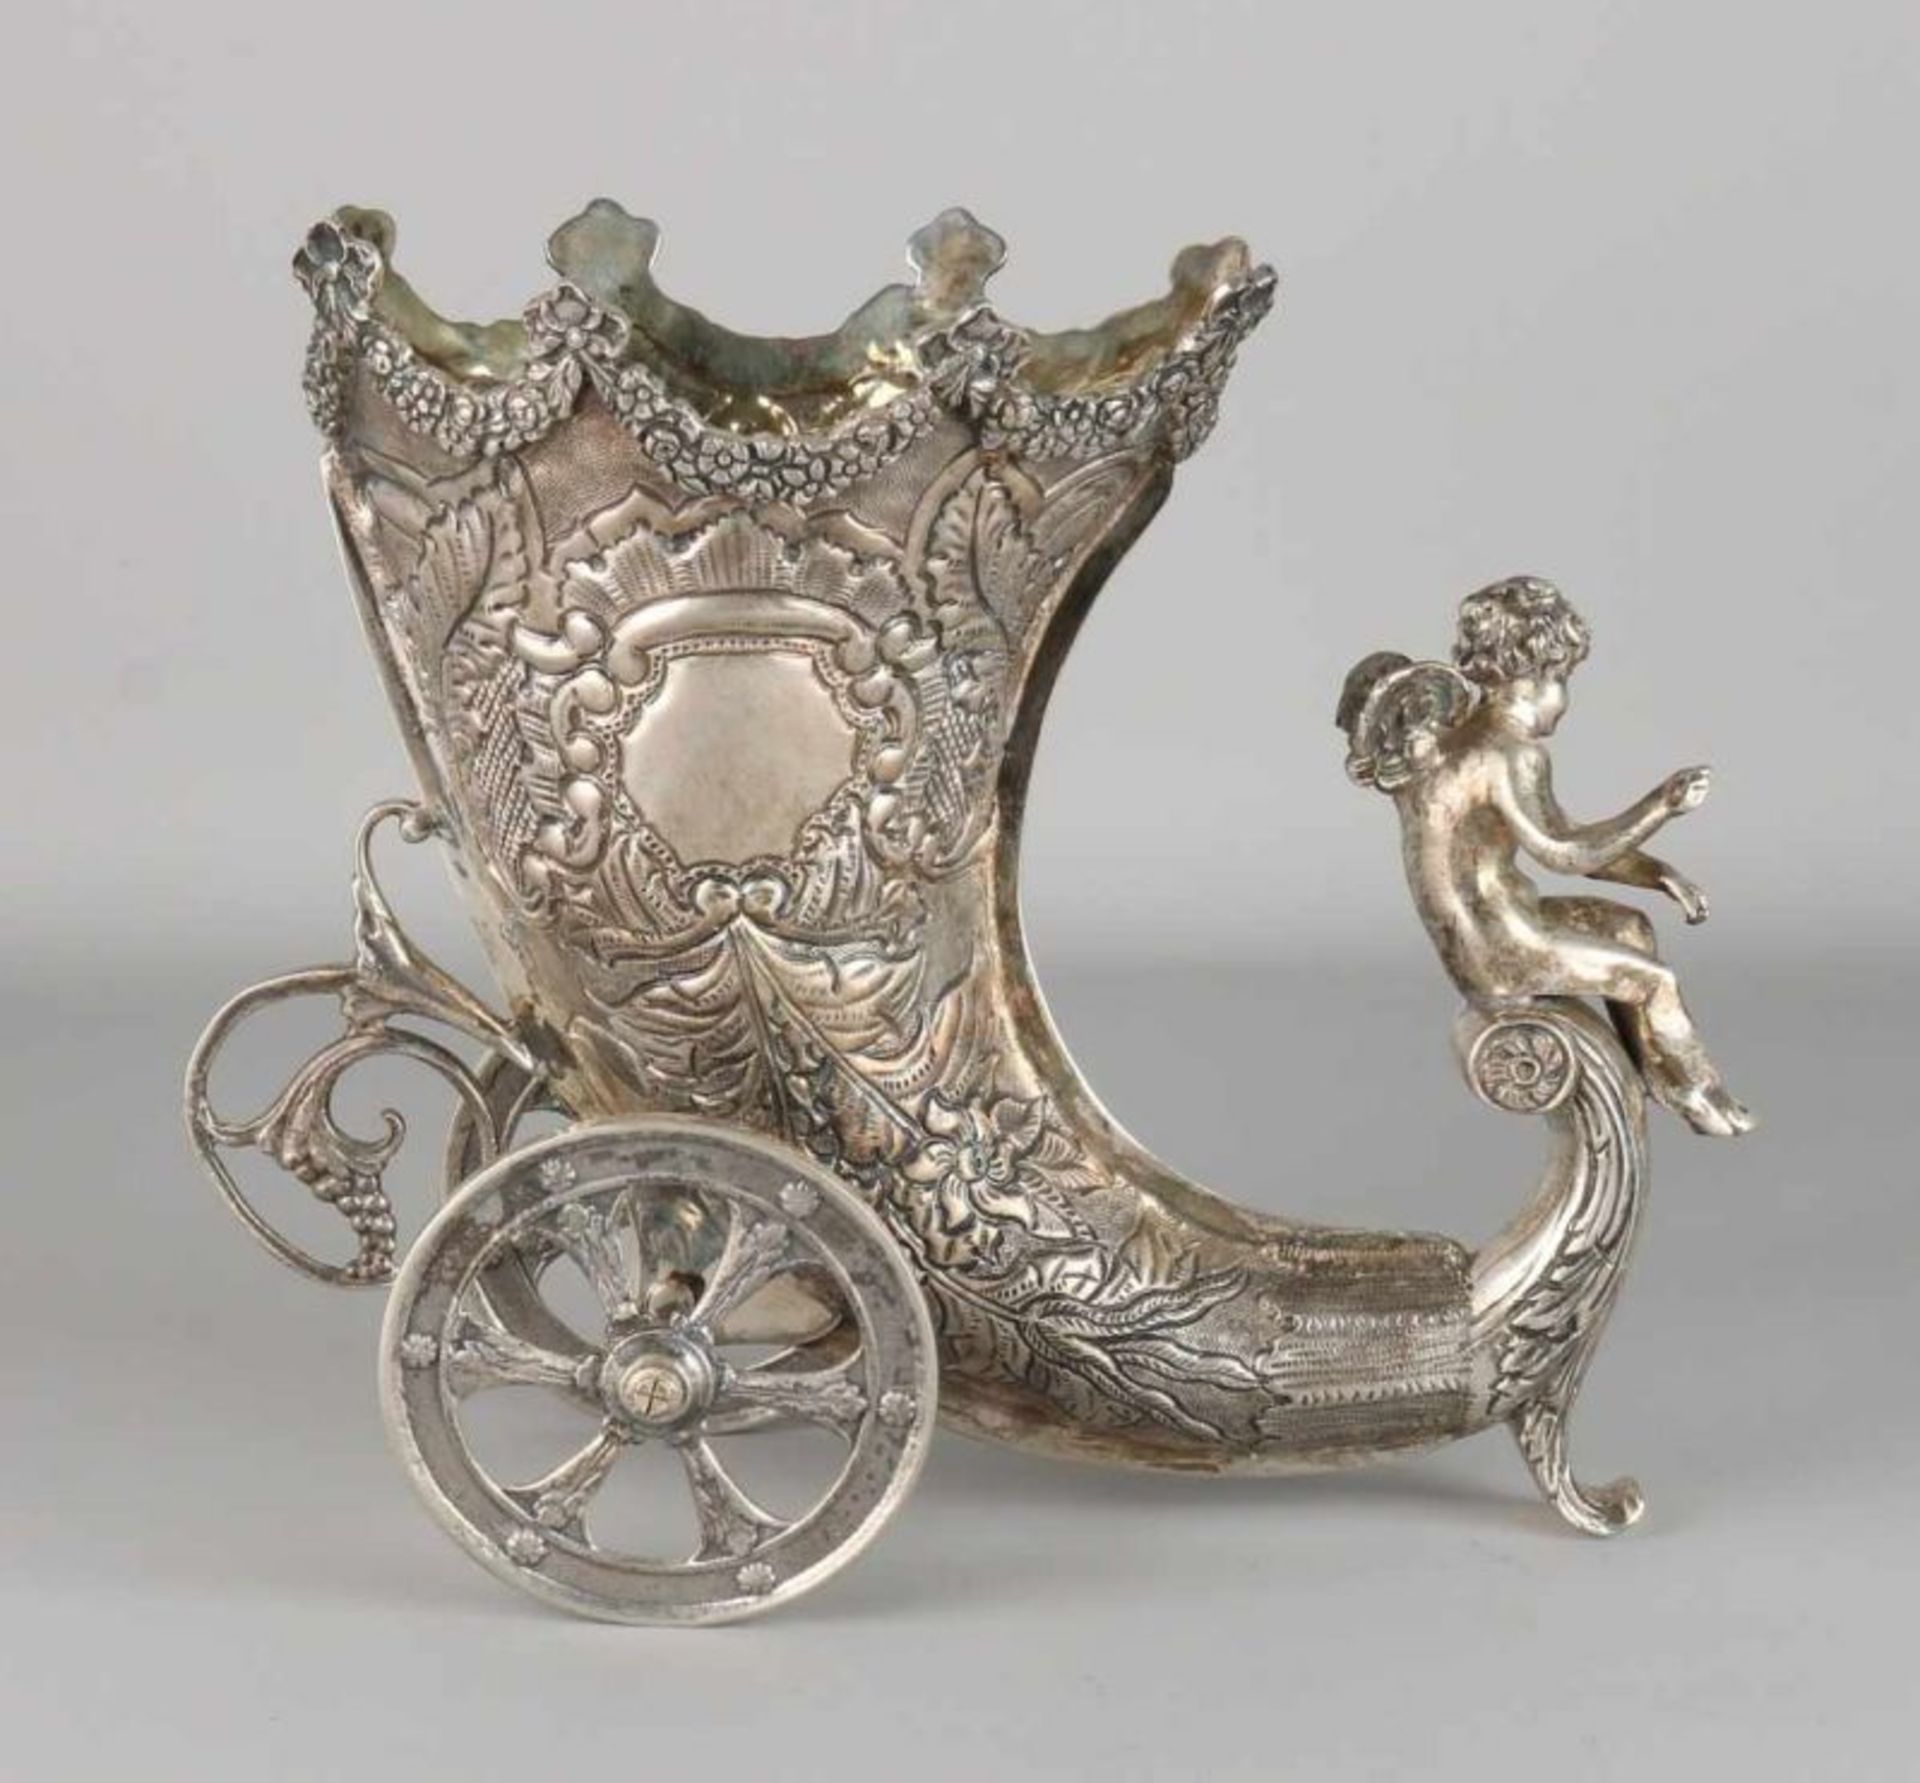 Impressive silver table piece, 925/000, a car in the shape of a cornucopia adorned with floral - Bild 2 aus 2